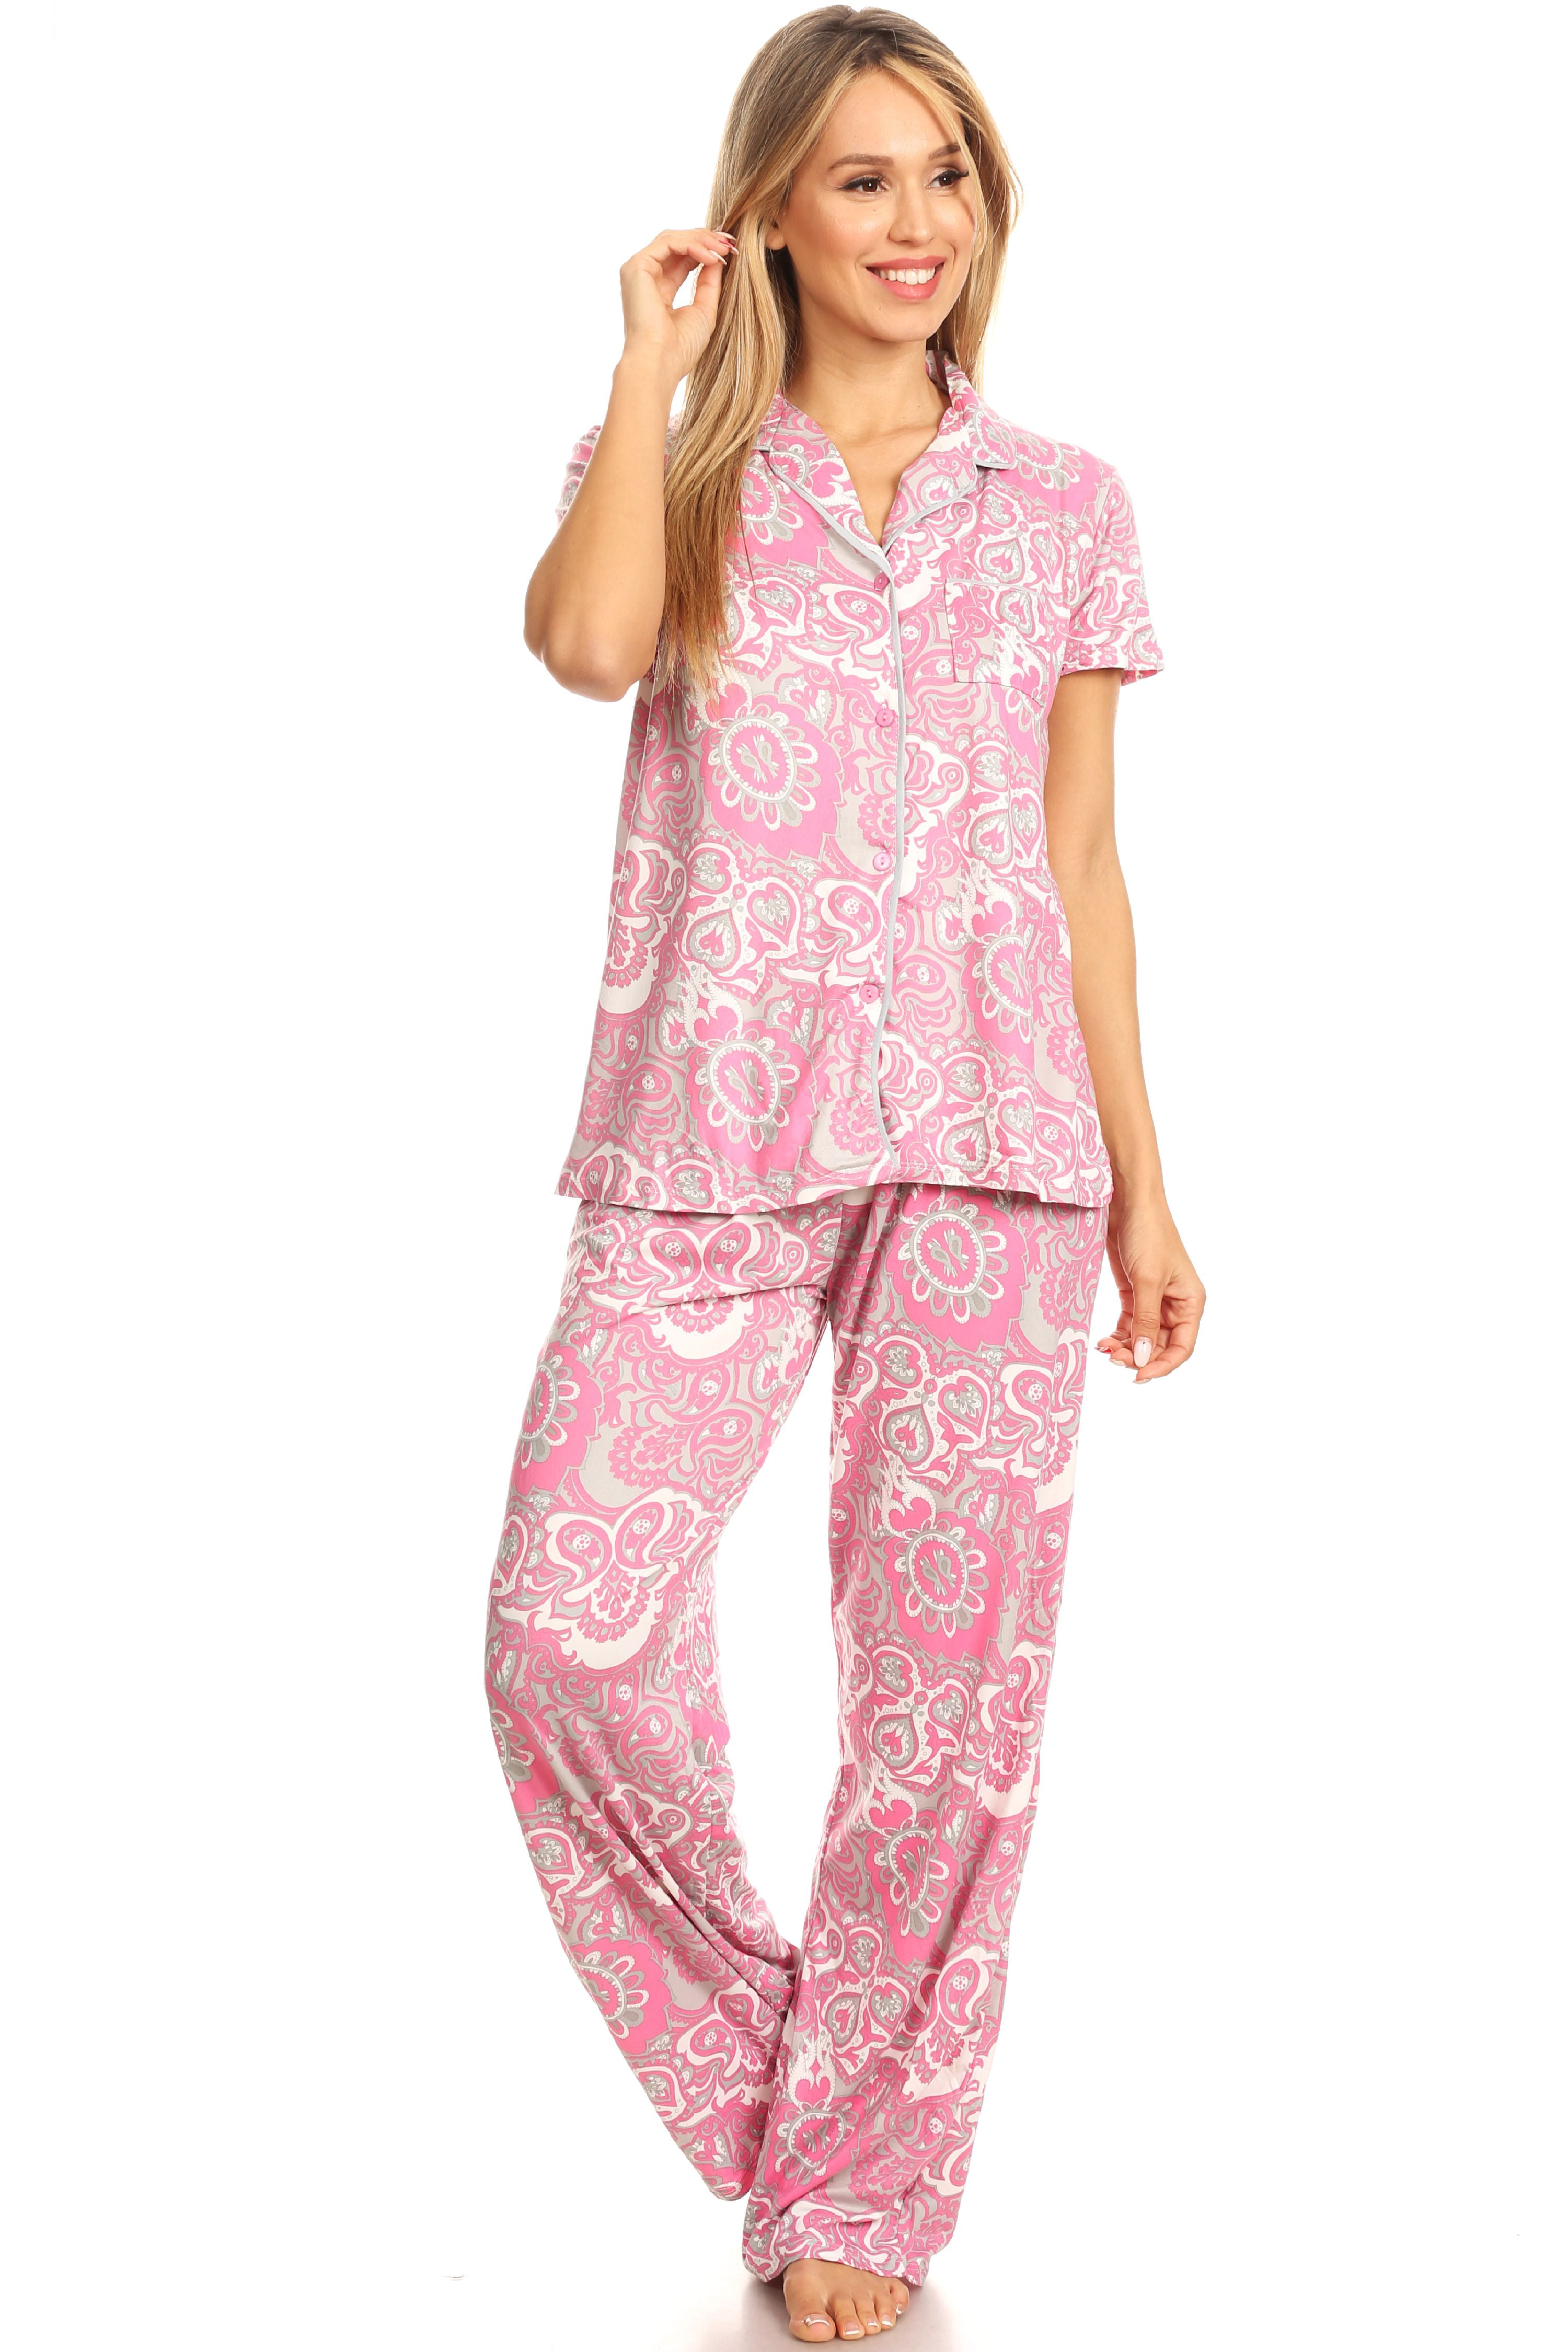 Premiere Fashion - Womens Sleepwear Pajamas Set Woman Short Sleeve ...